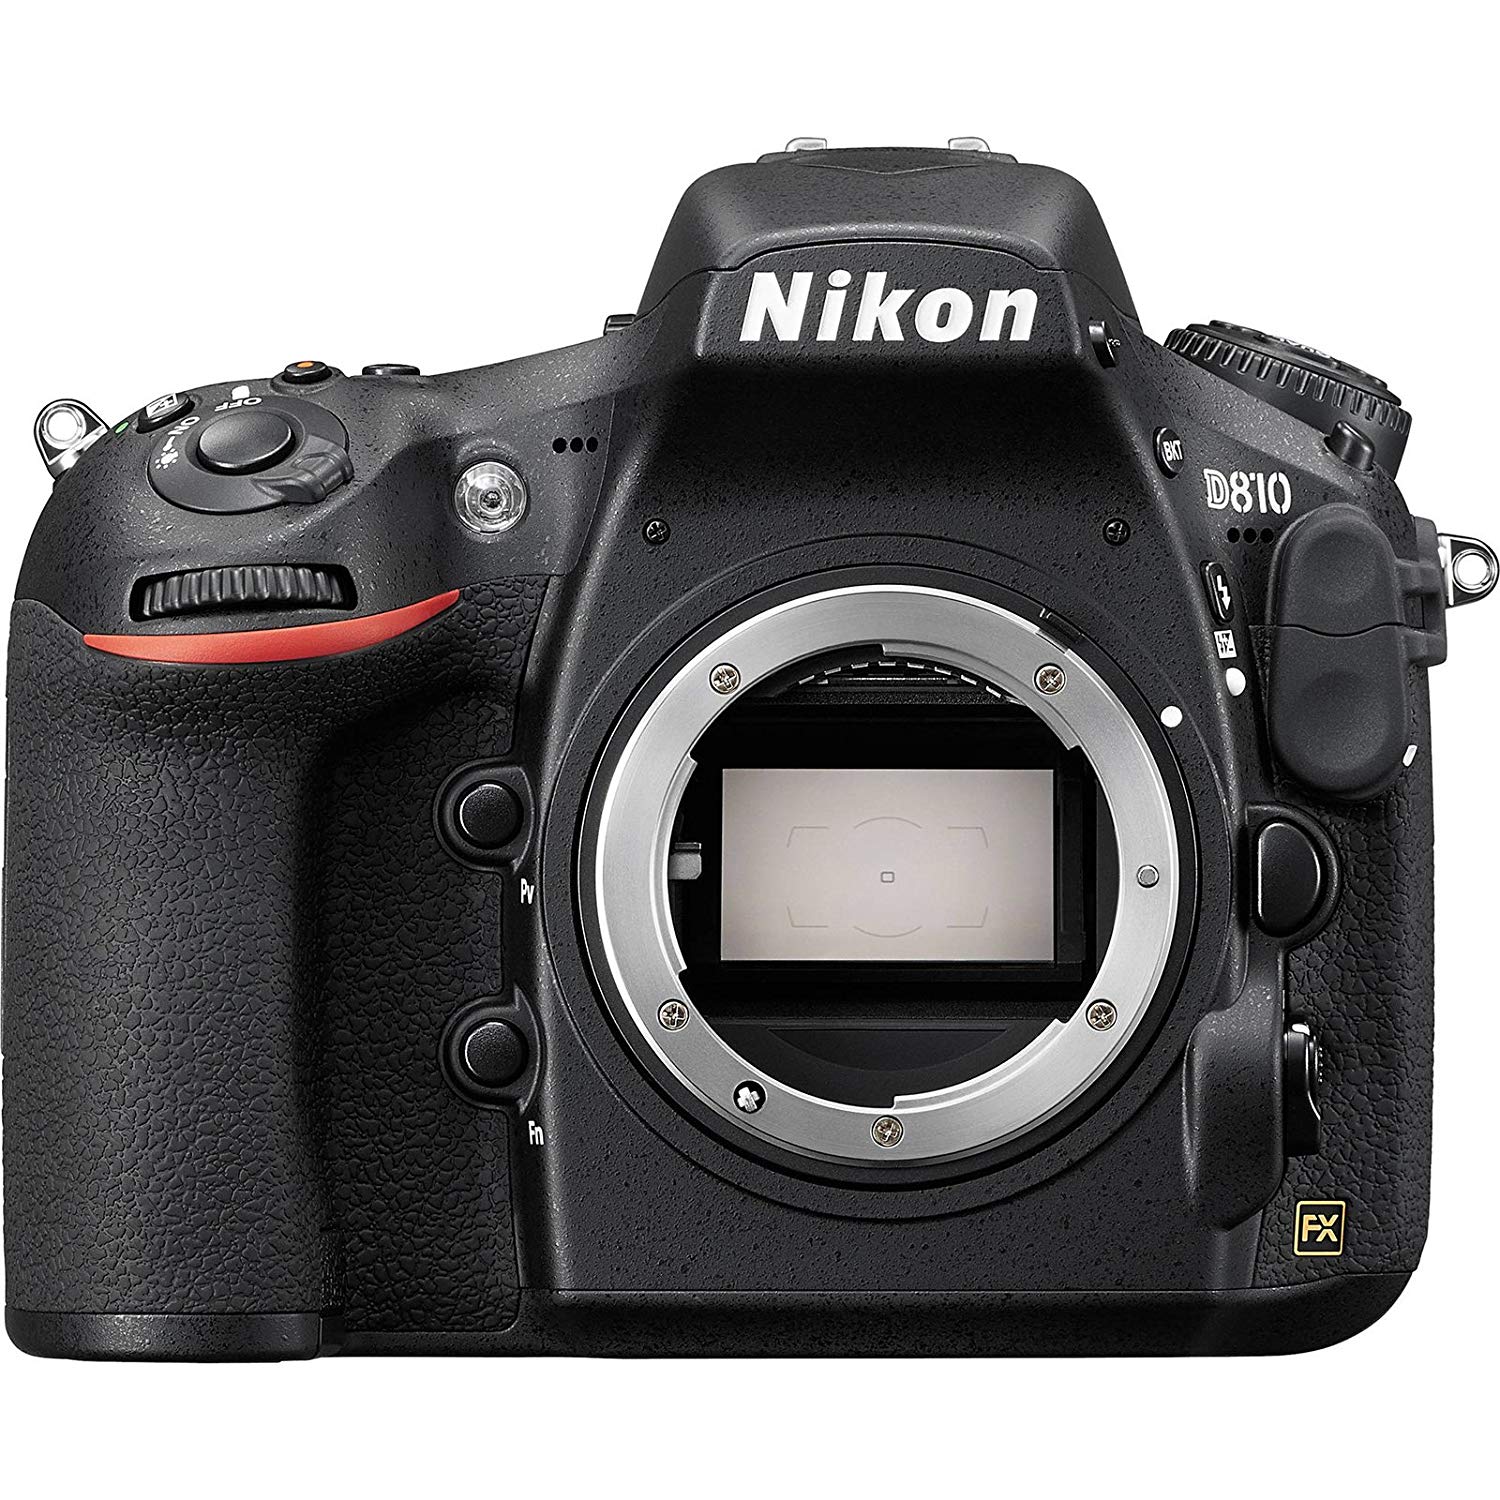 Nikon Corpo da câmera digital SLR D810 (recondicionado ...